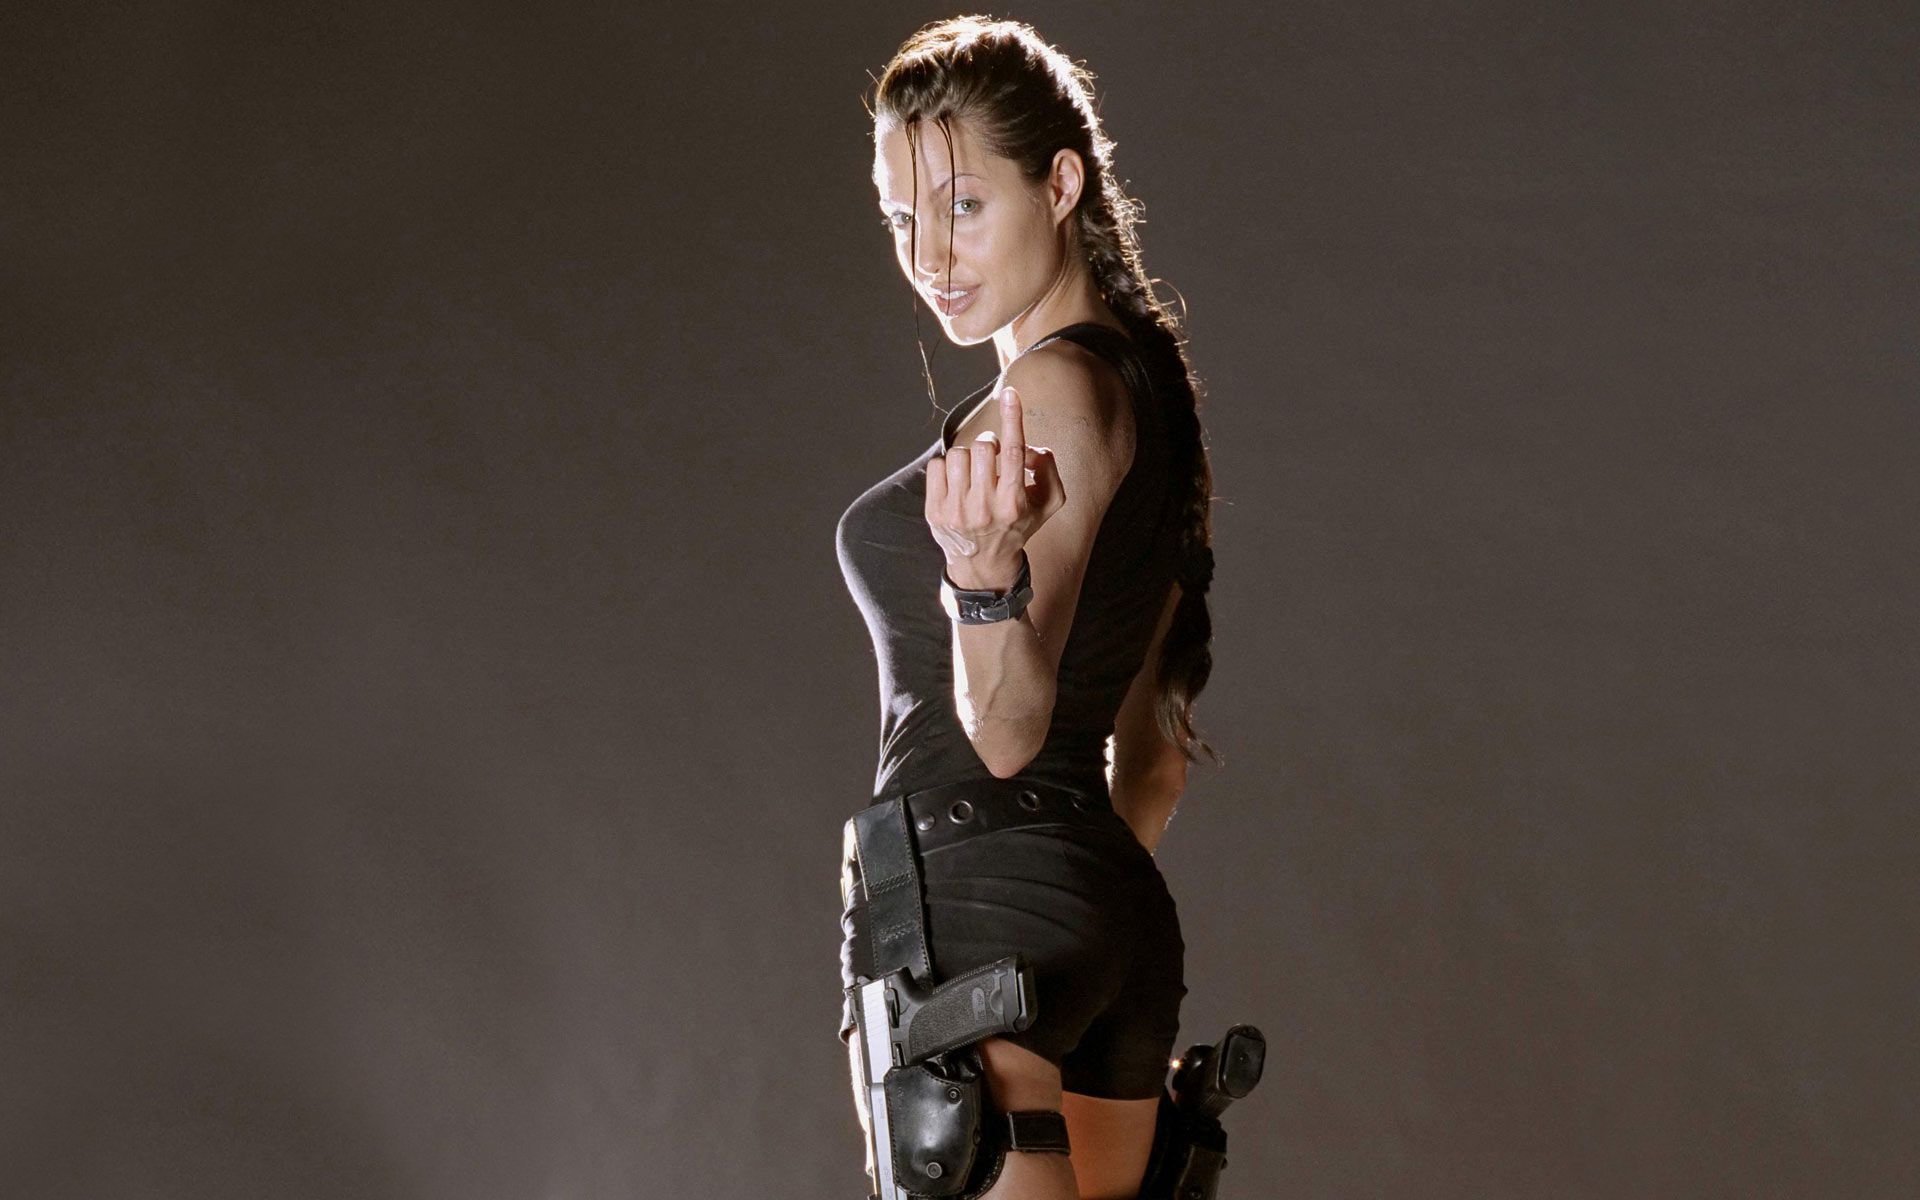 Lara Croft played by Angelina Jolie in "Tomb Raider"